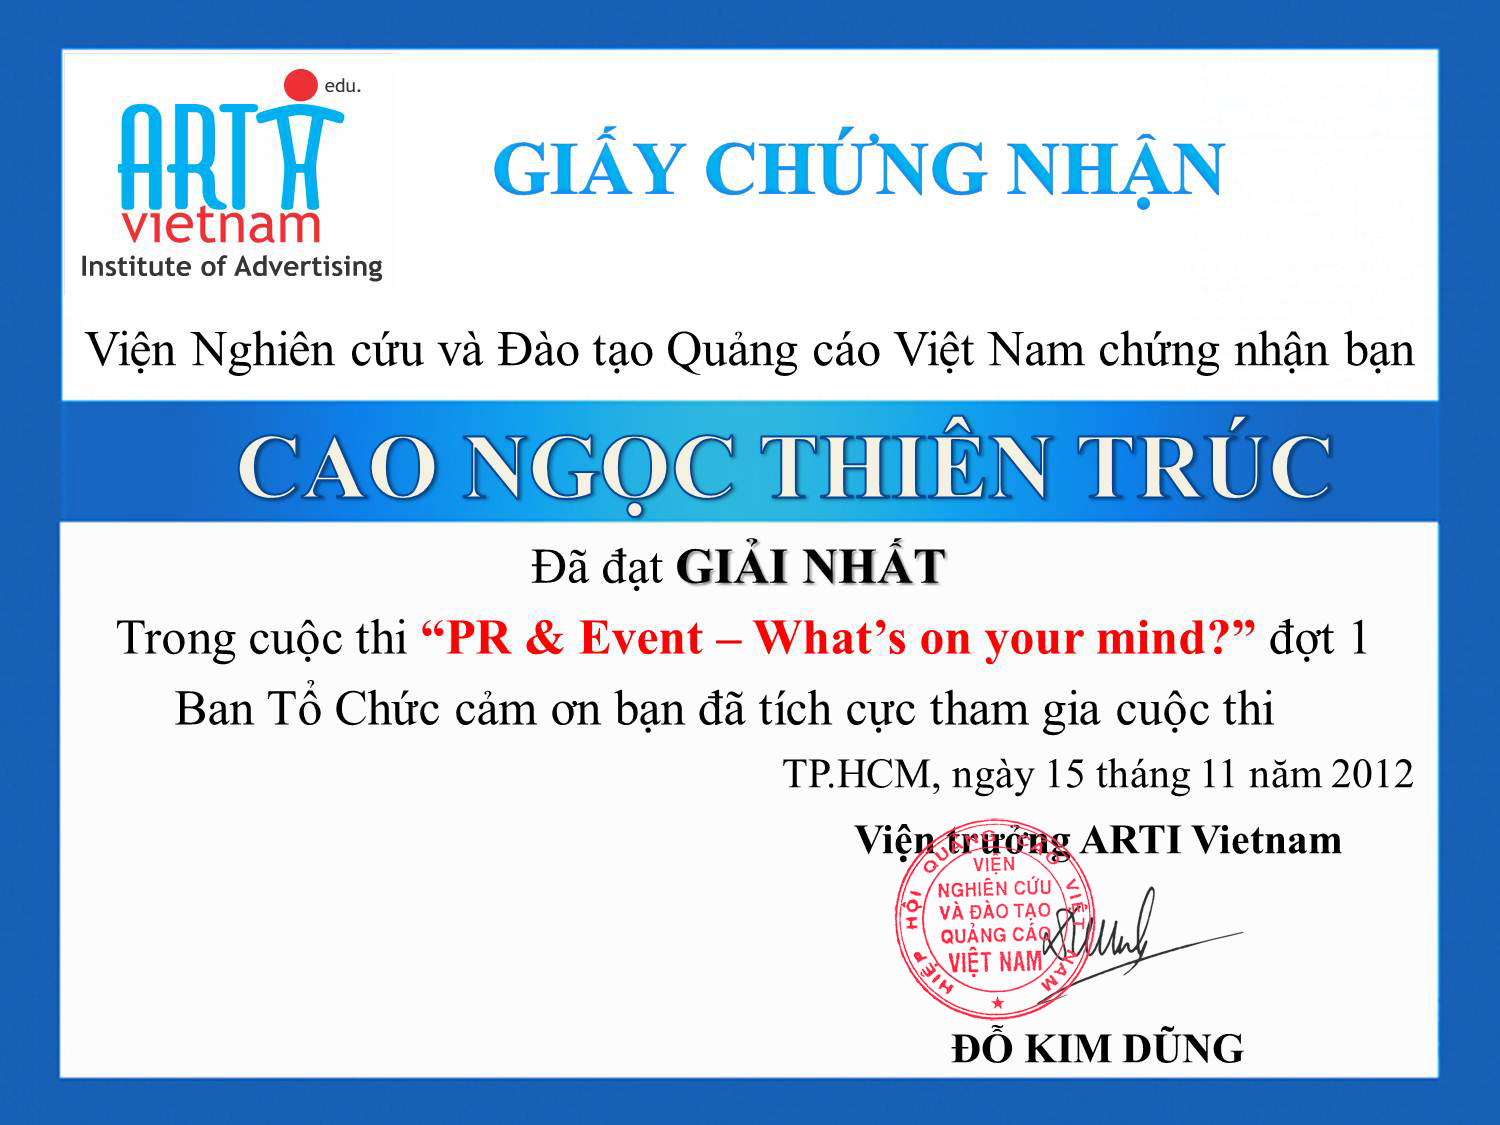 Description: ARTIVietnam_Giai nhat cuoc thi_Ban Cao Ngoc Thien Truc